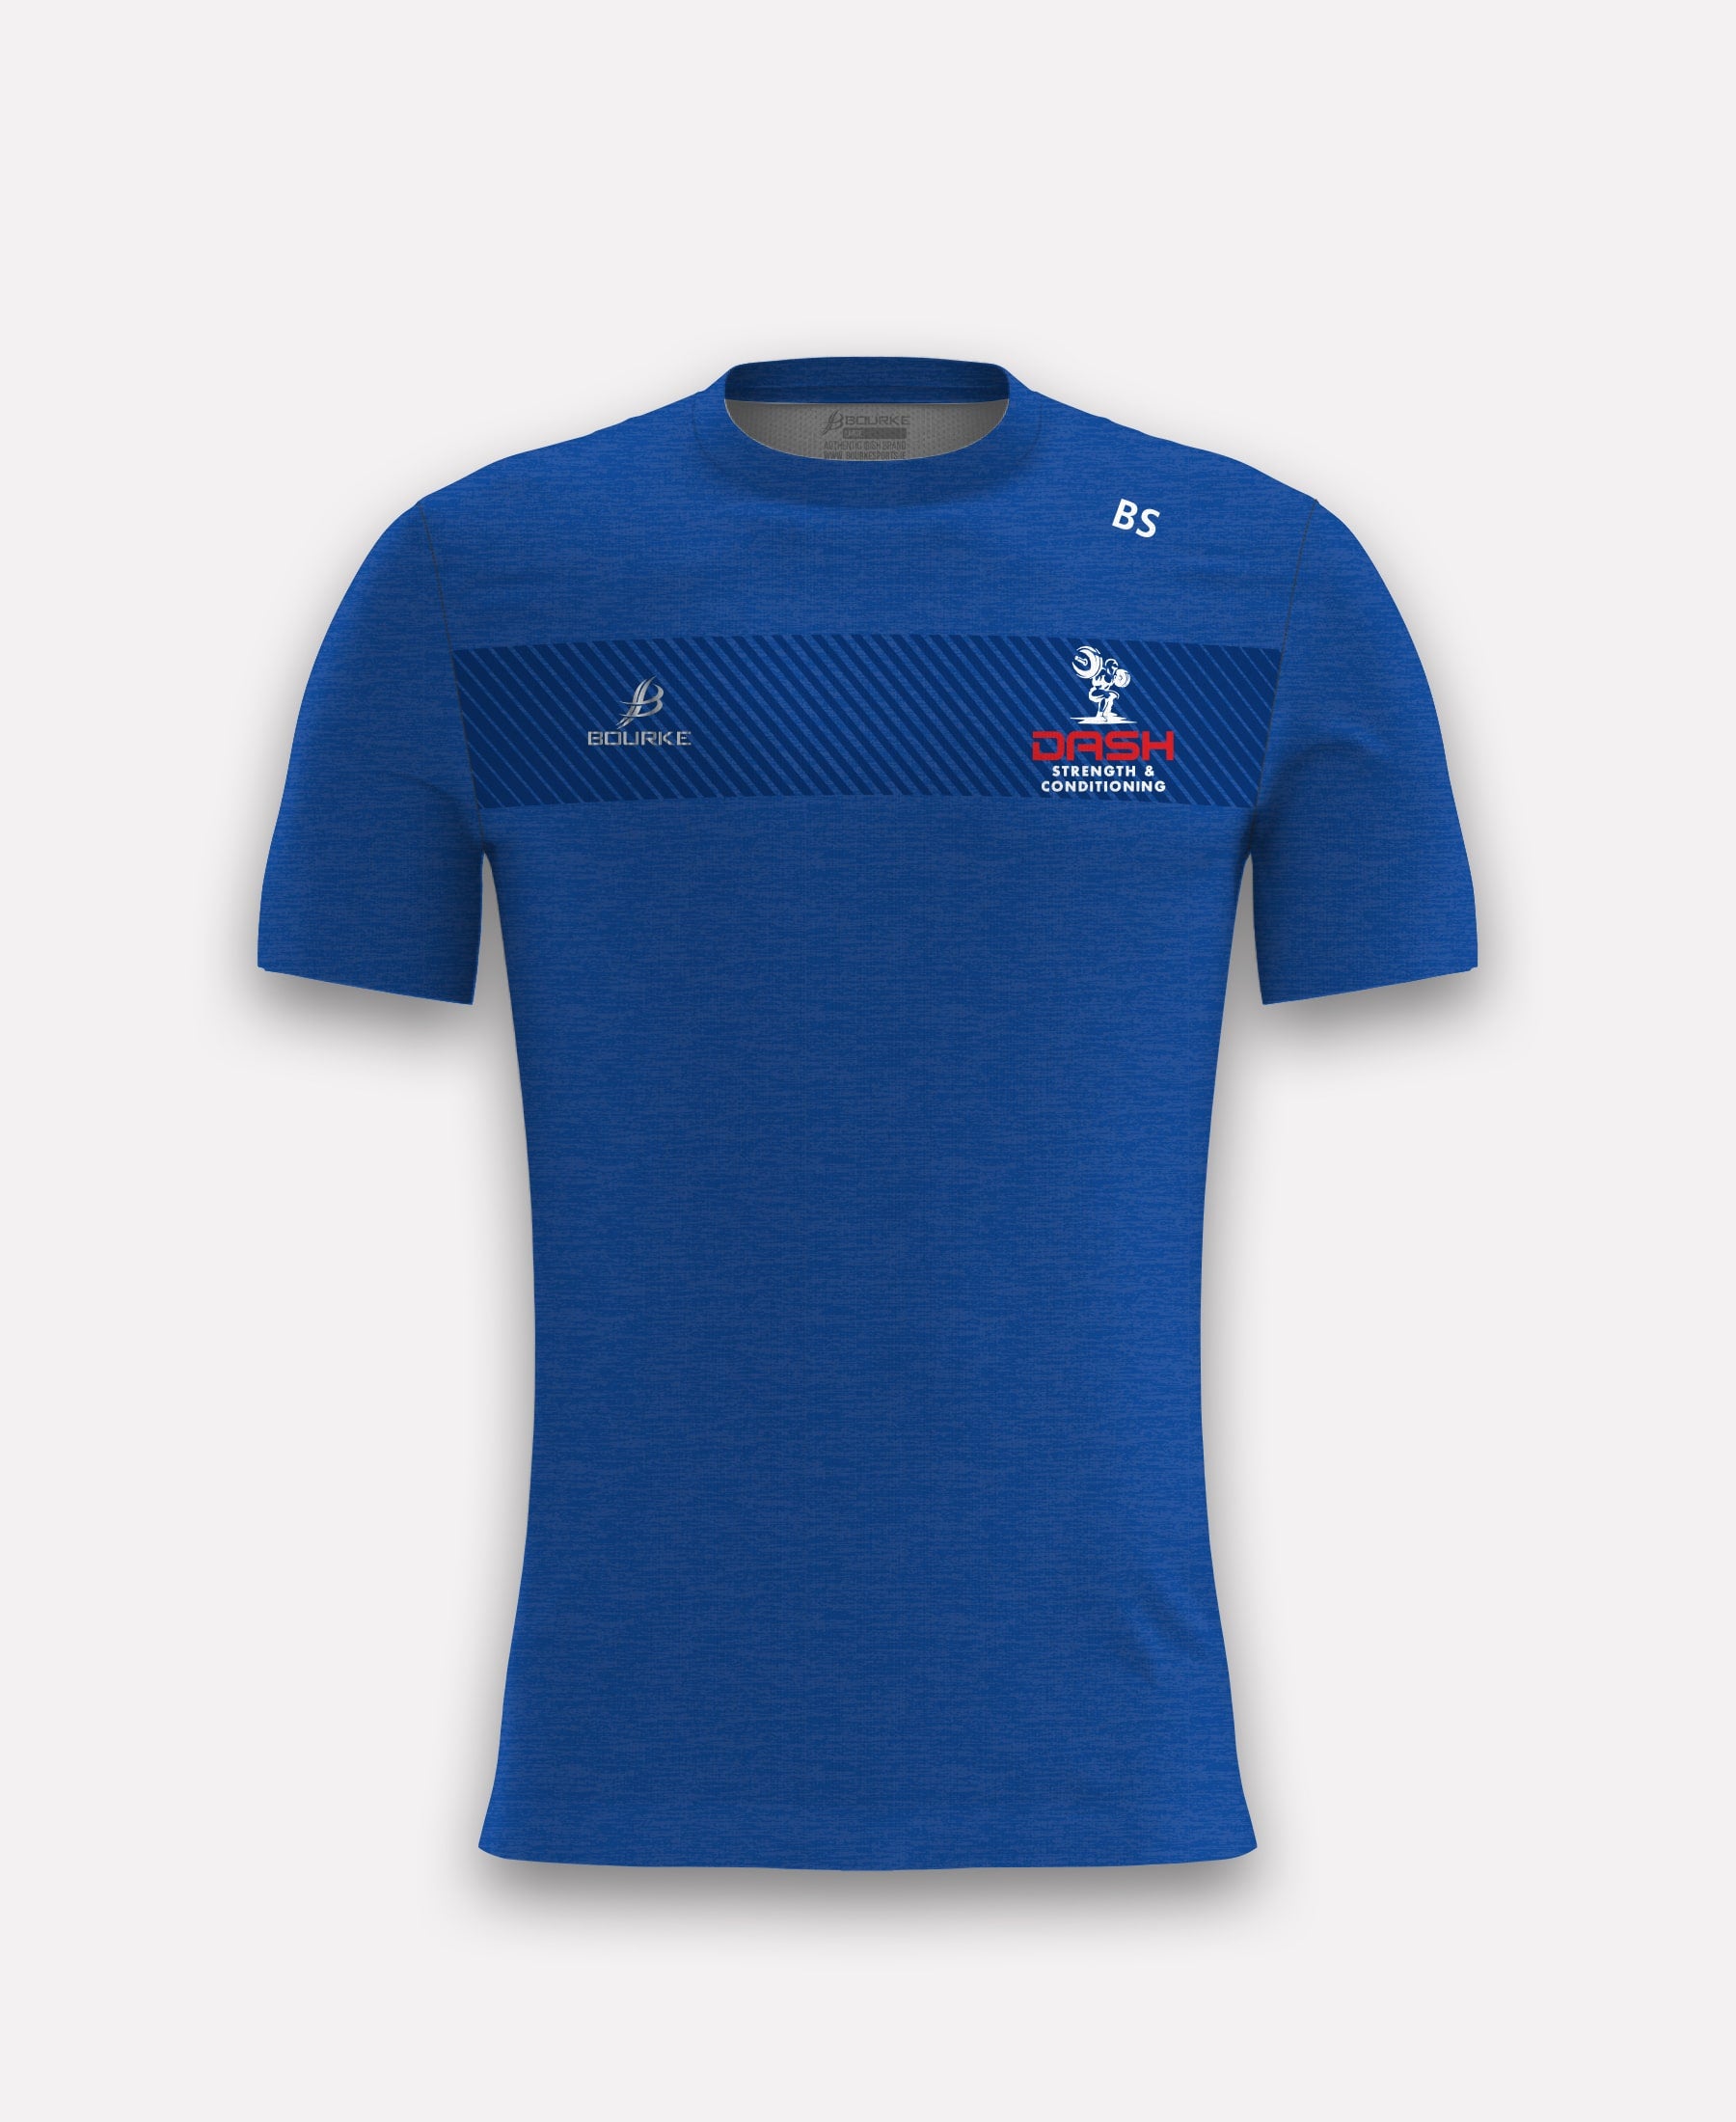 DASH Strength & Conditioning TACA T-Shirt (Blue)